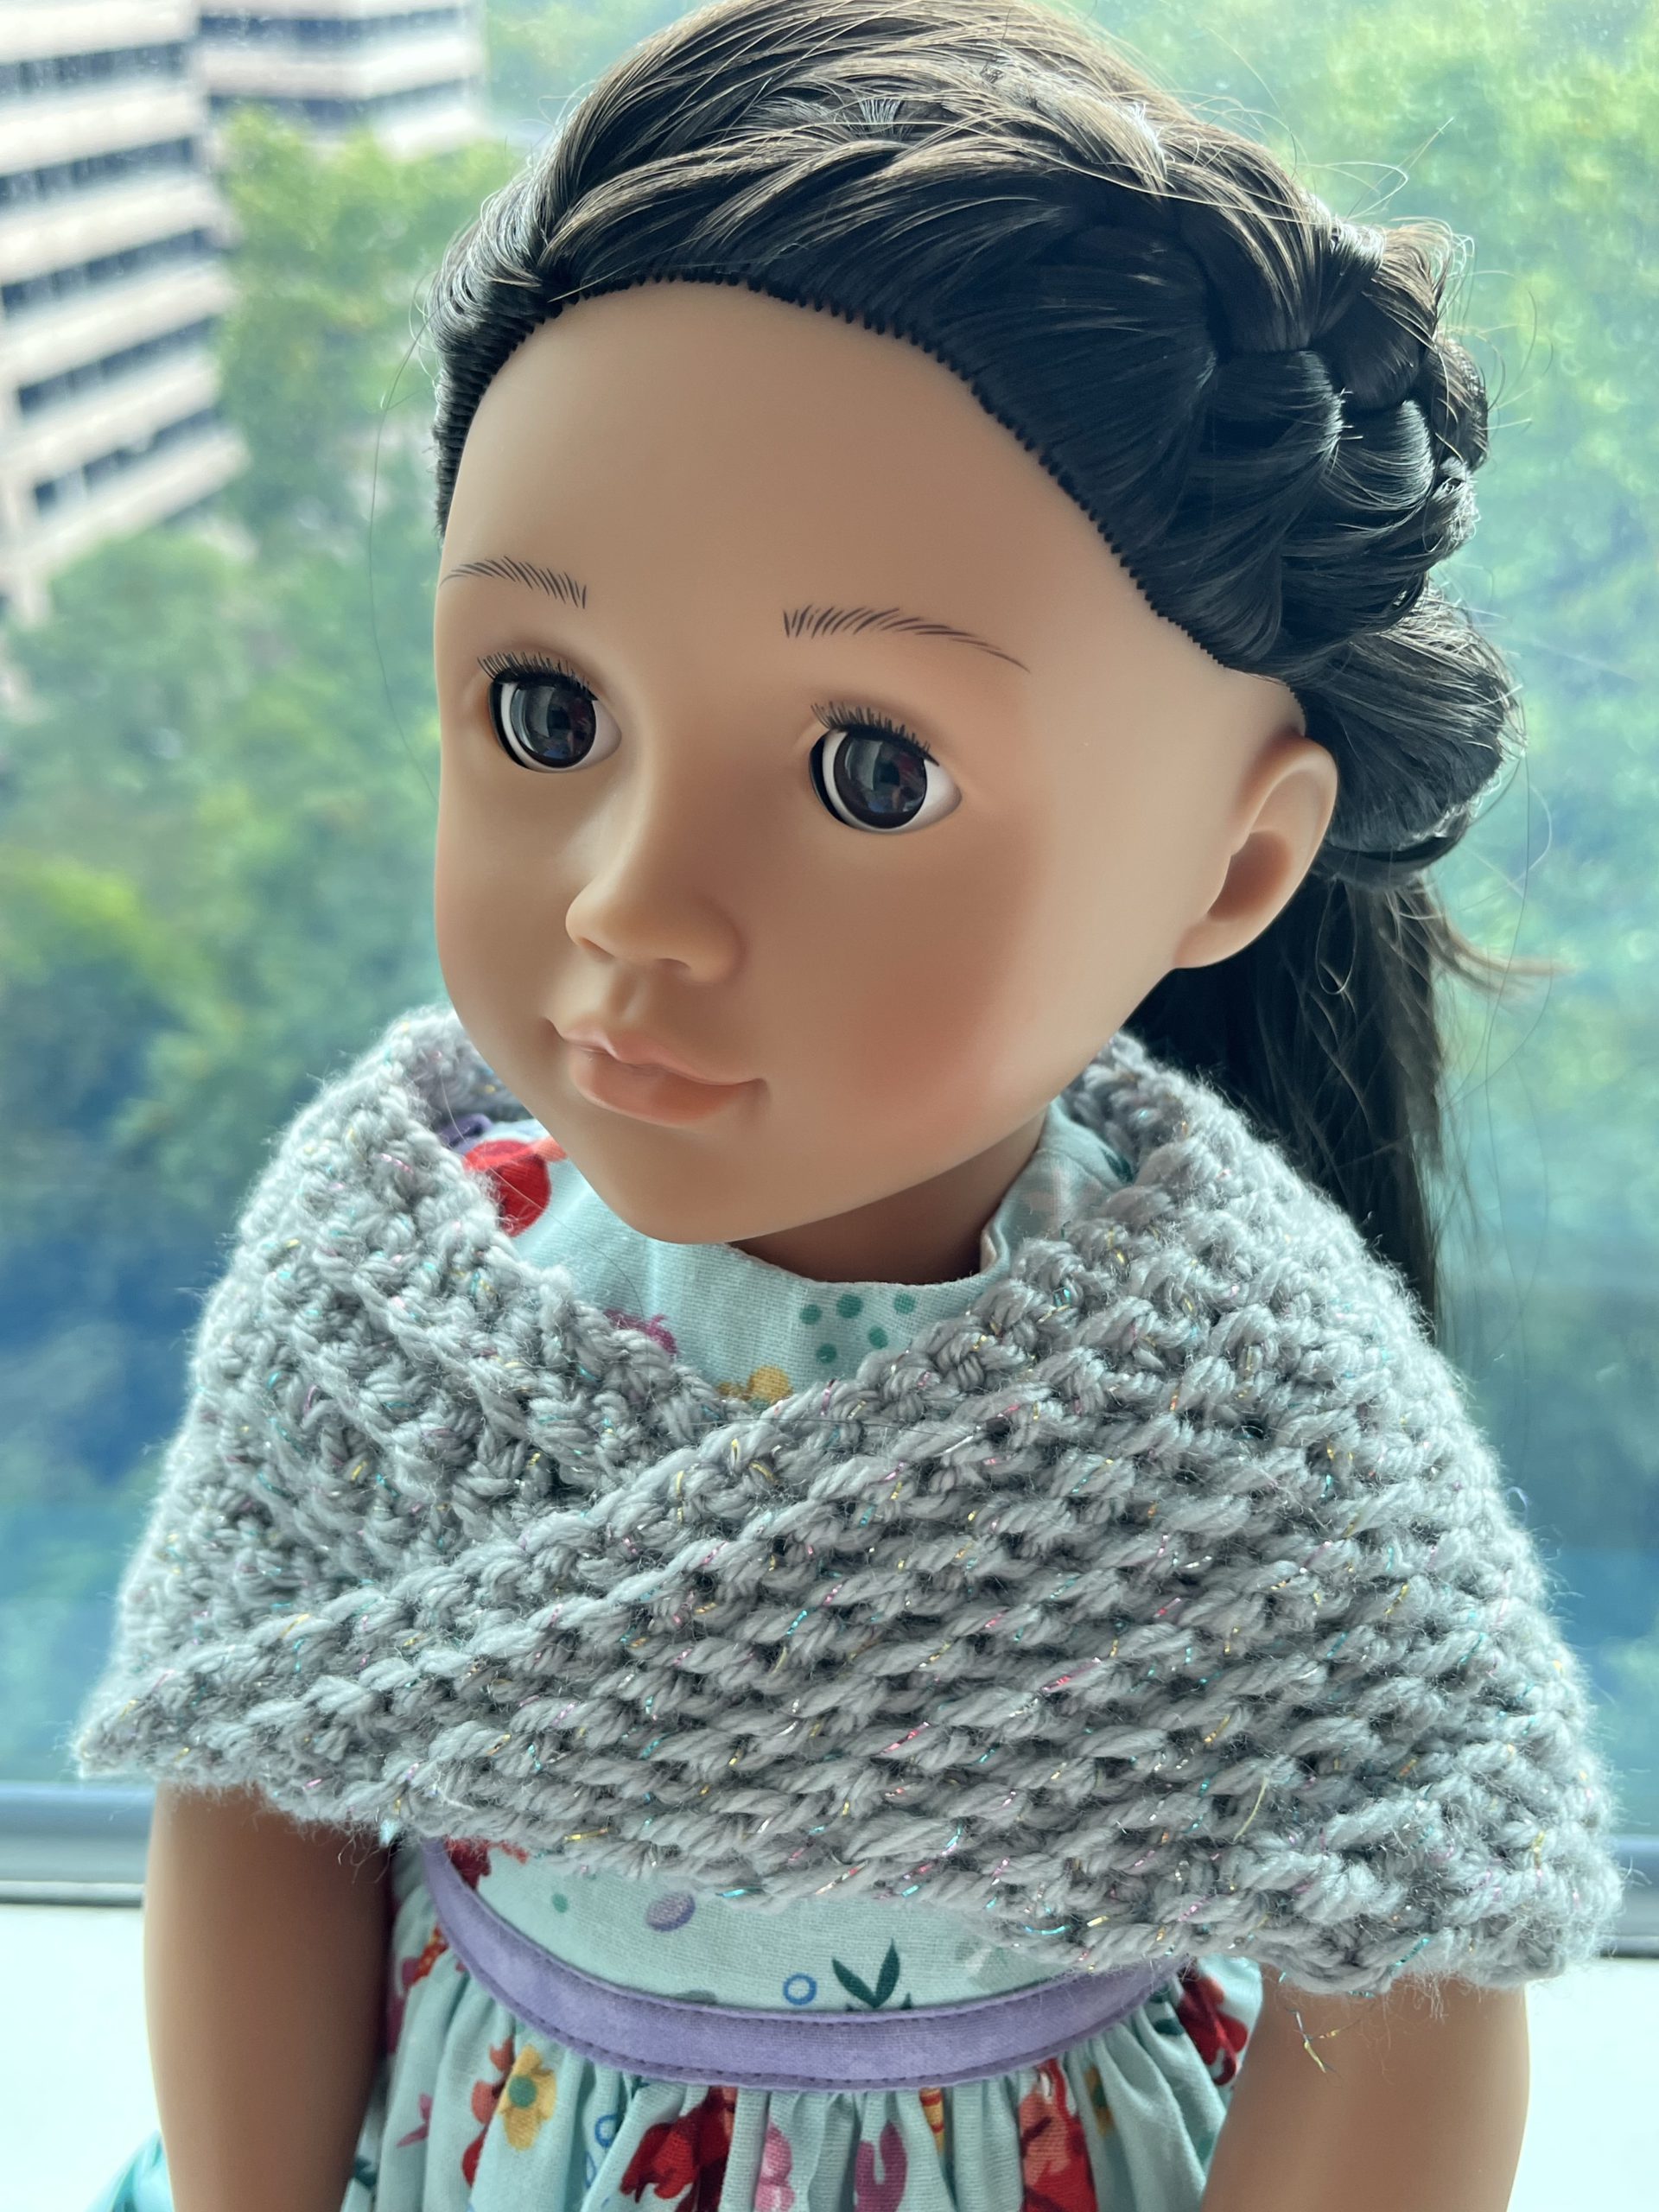 Rosie Crochets Too: My New Hobby